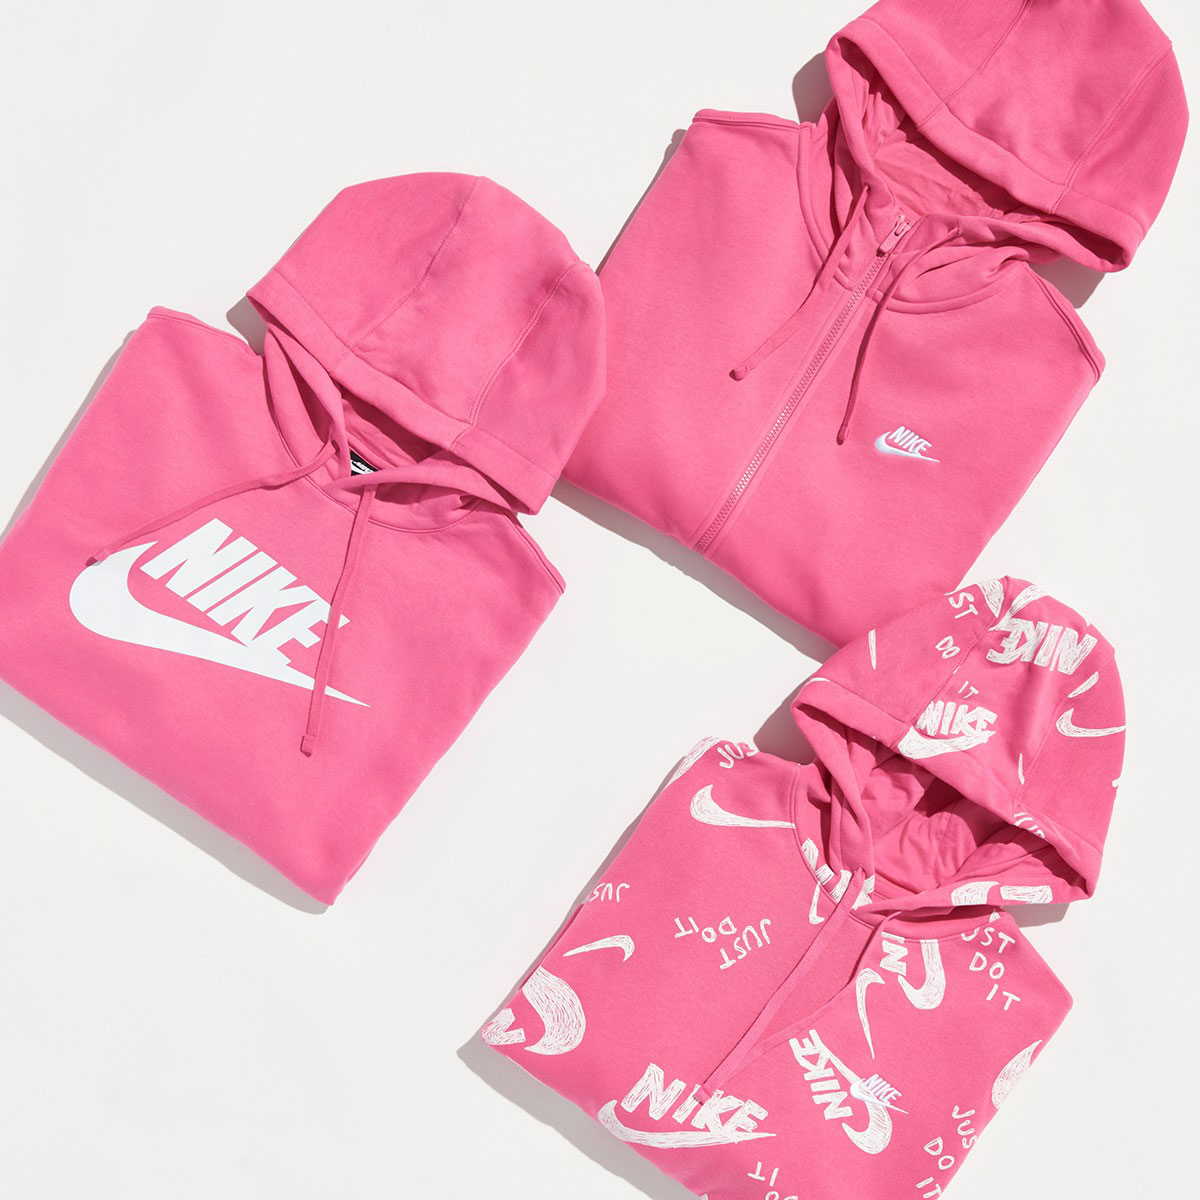 nike-air-max-1-pink-strawberry-lemonade-sneaker-outfit-2